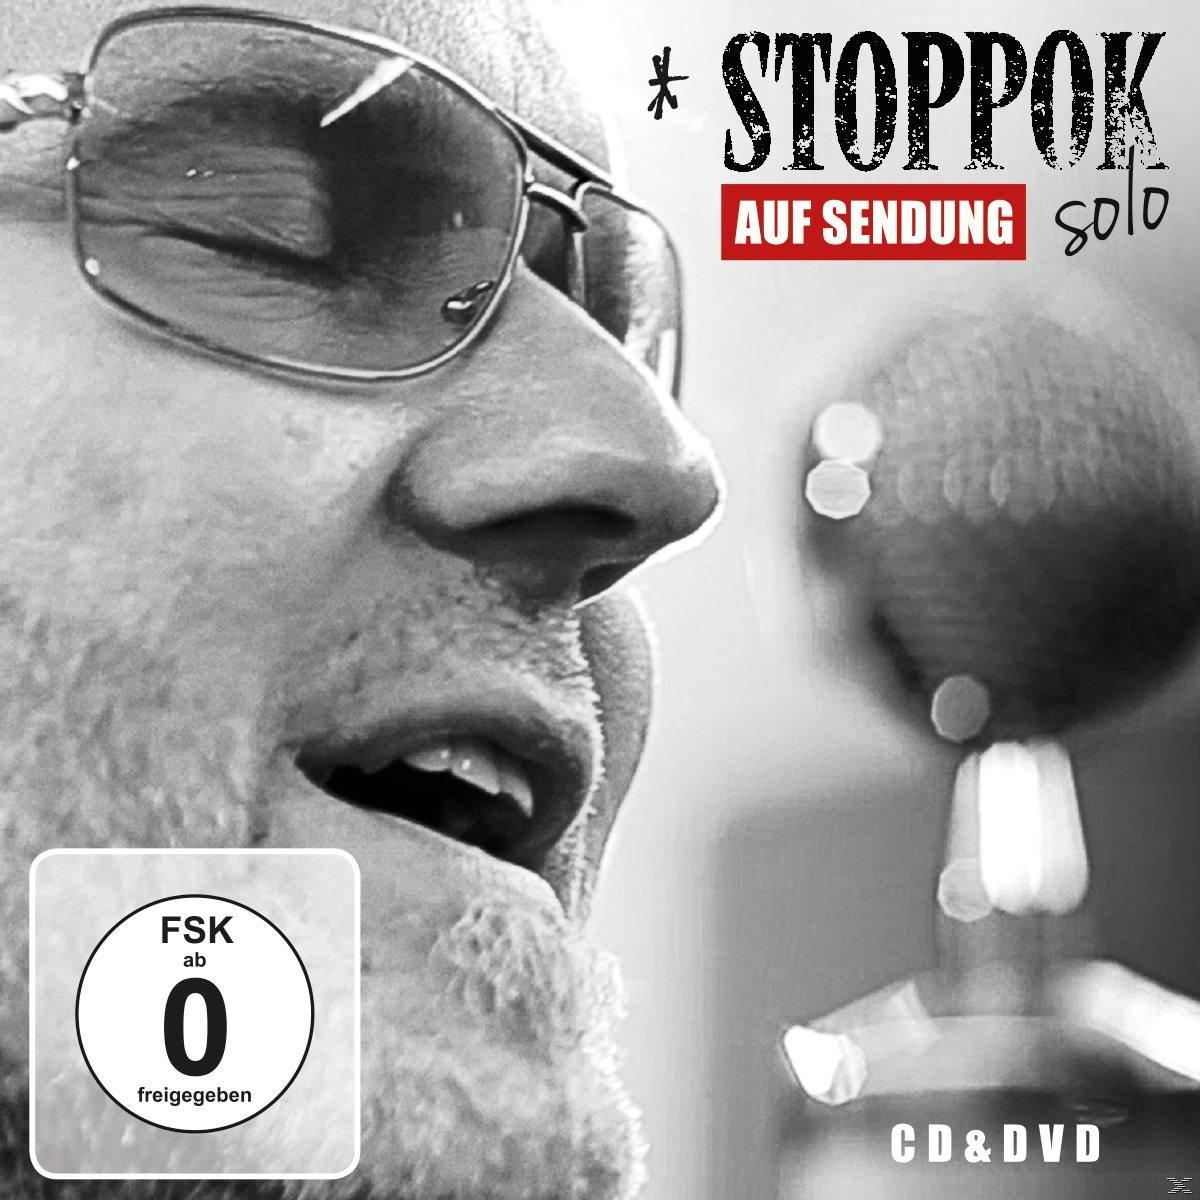 (Solo) Sendung (CD Auf Video) - + STOPPOK DVD -